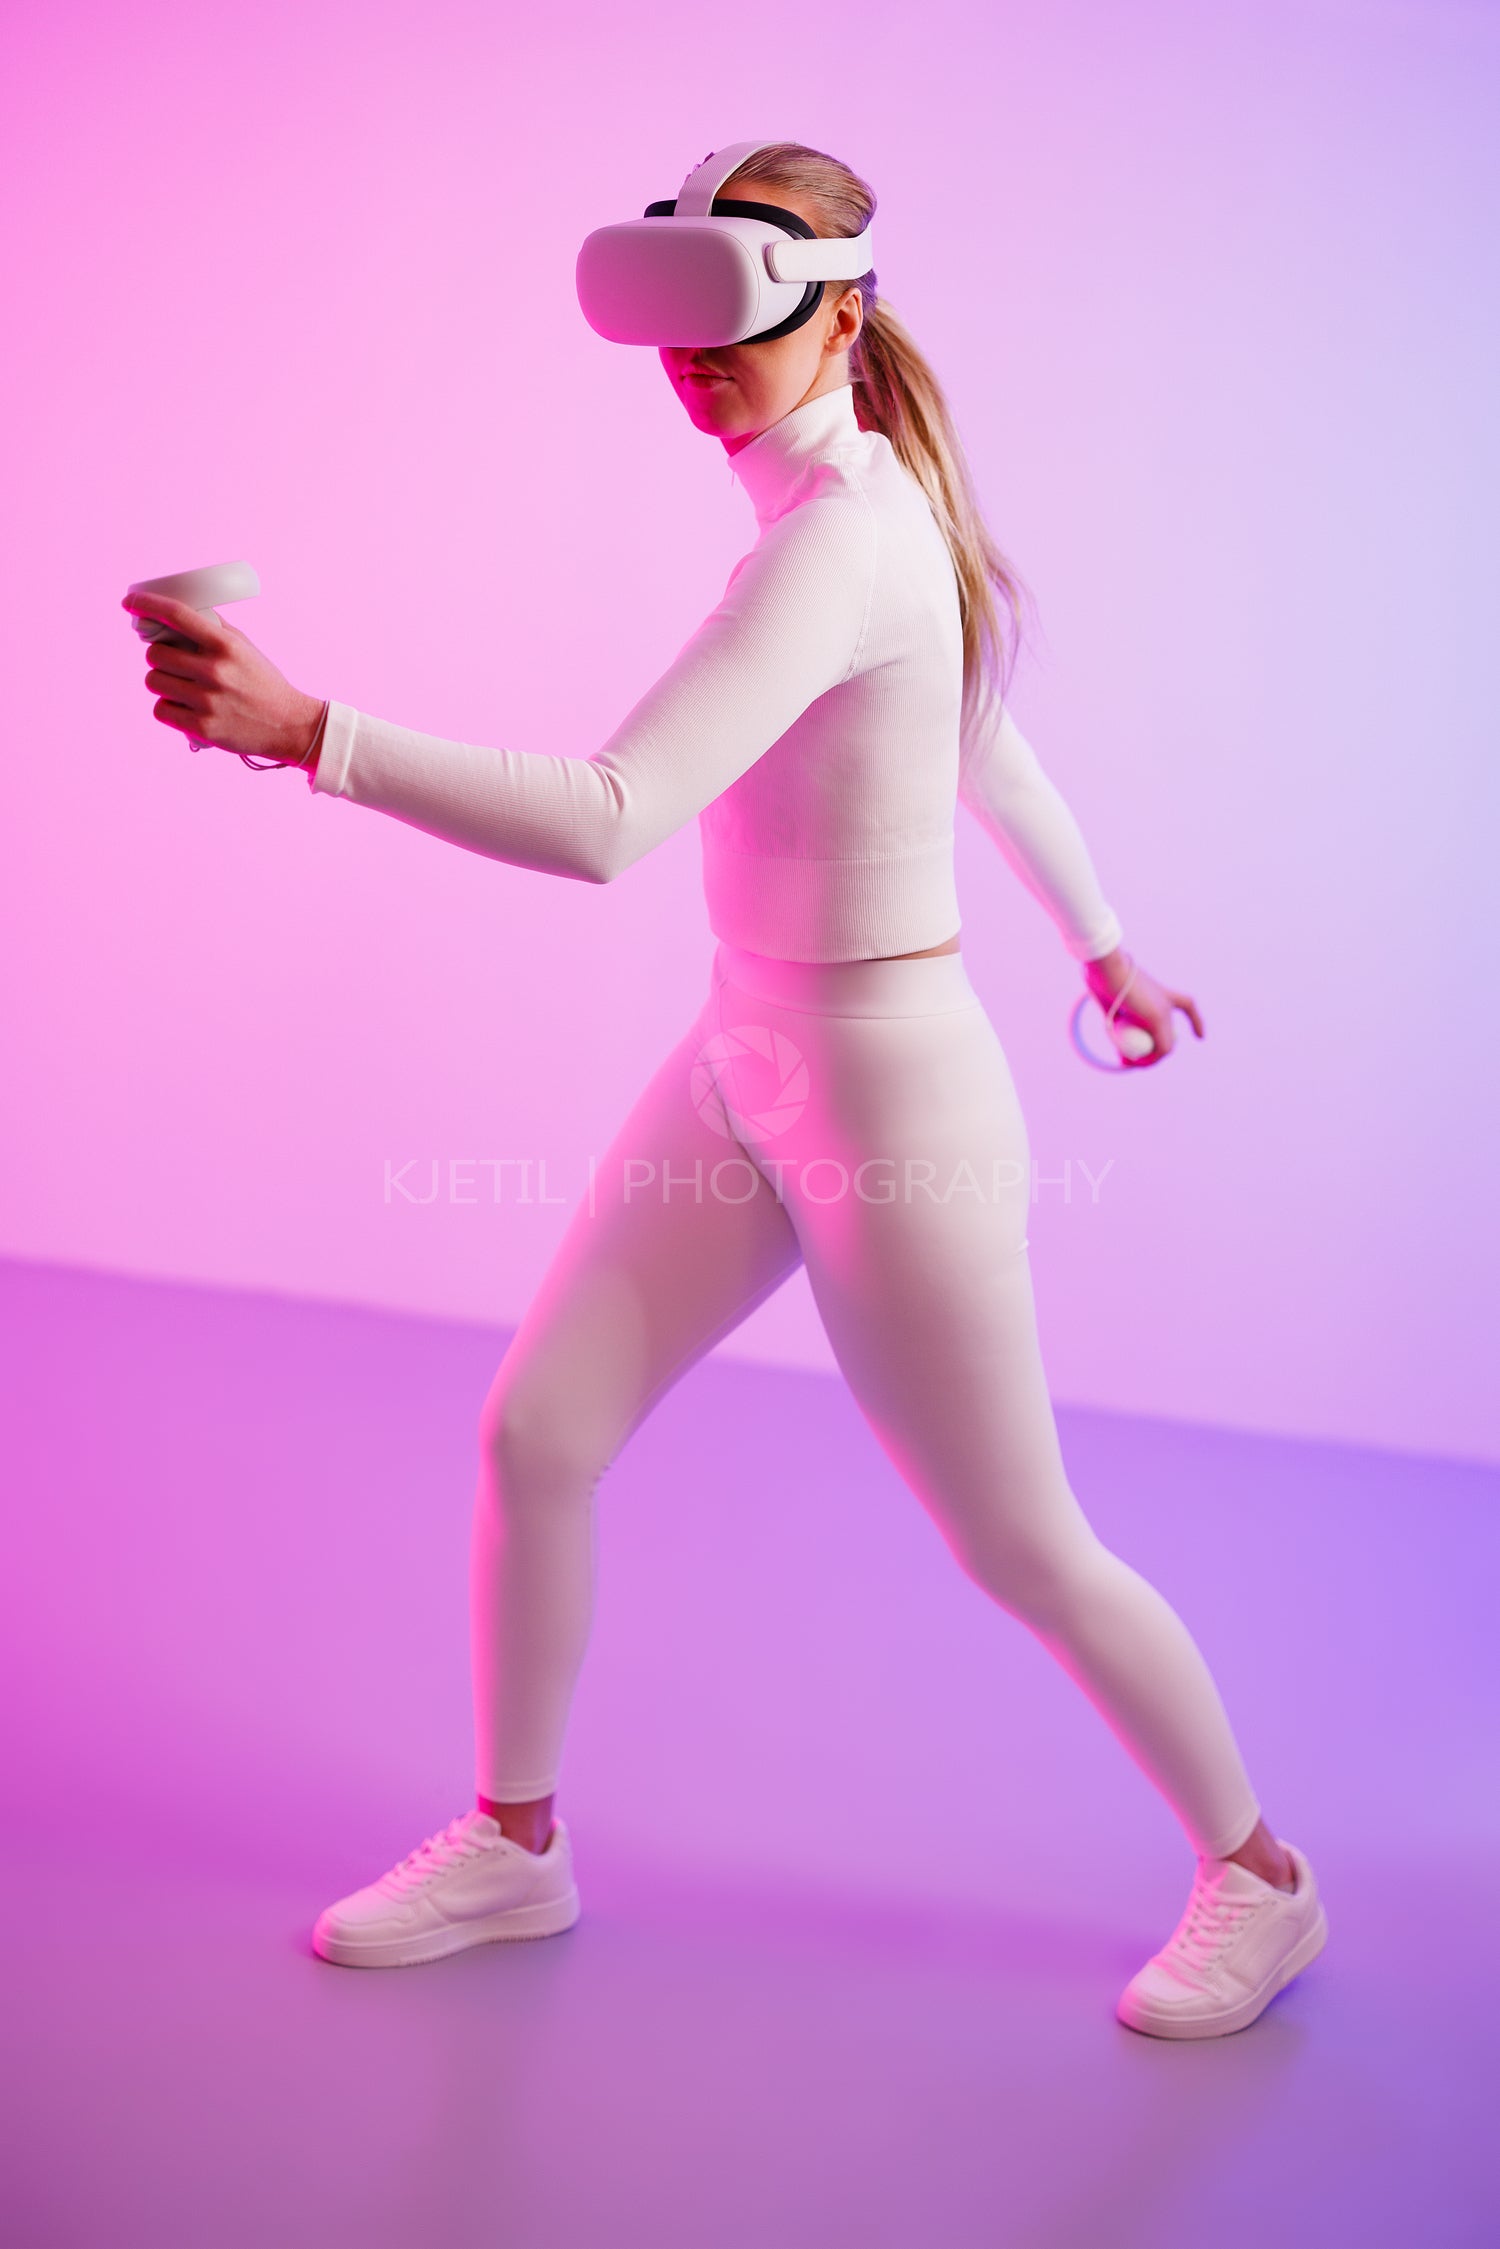 Female in VR glasses against illuminated neon background